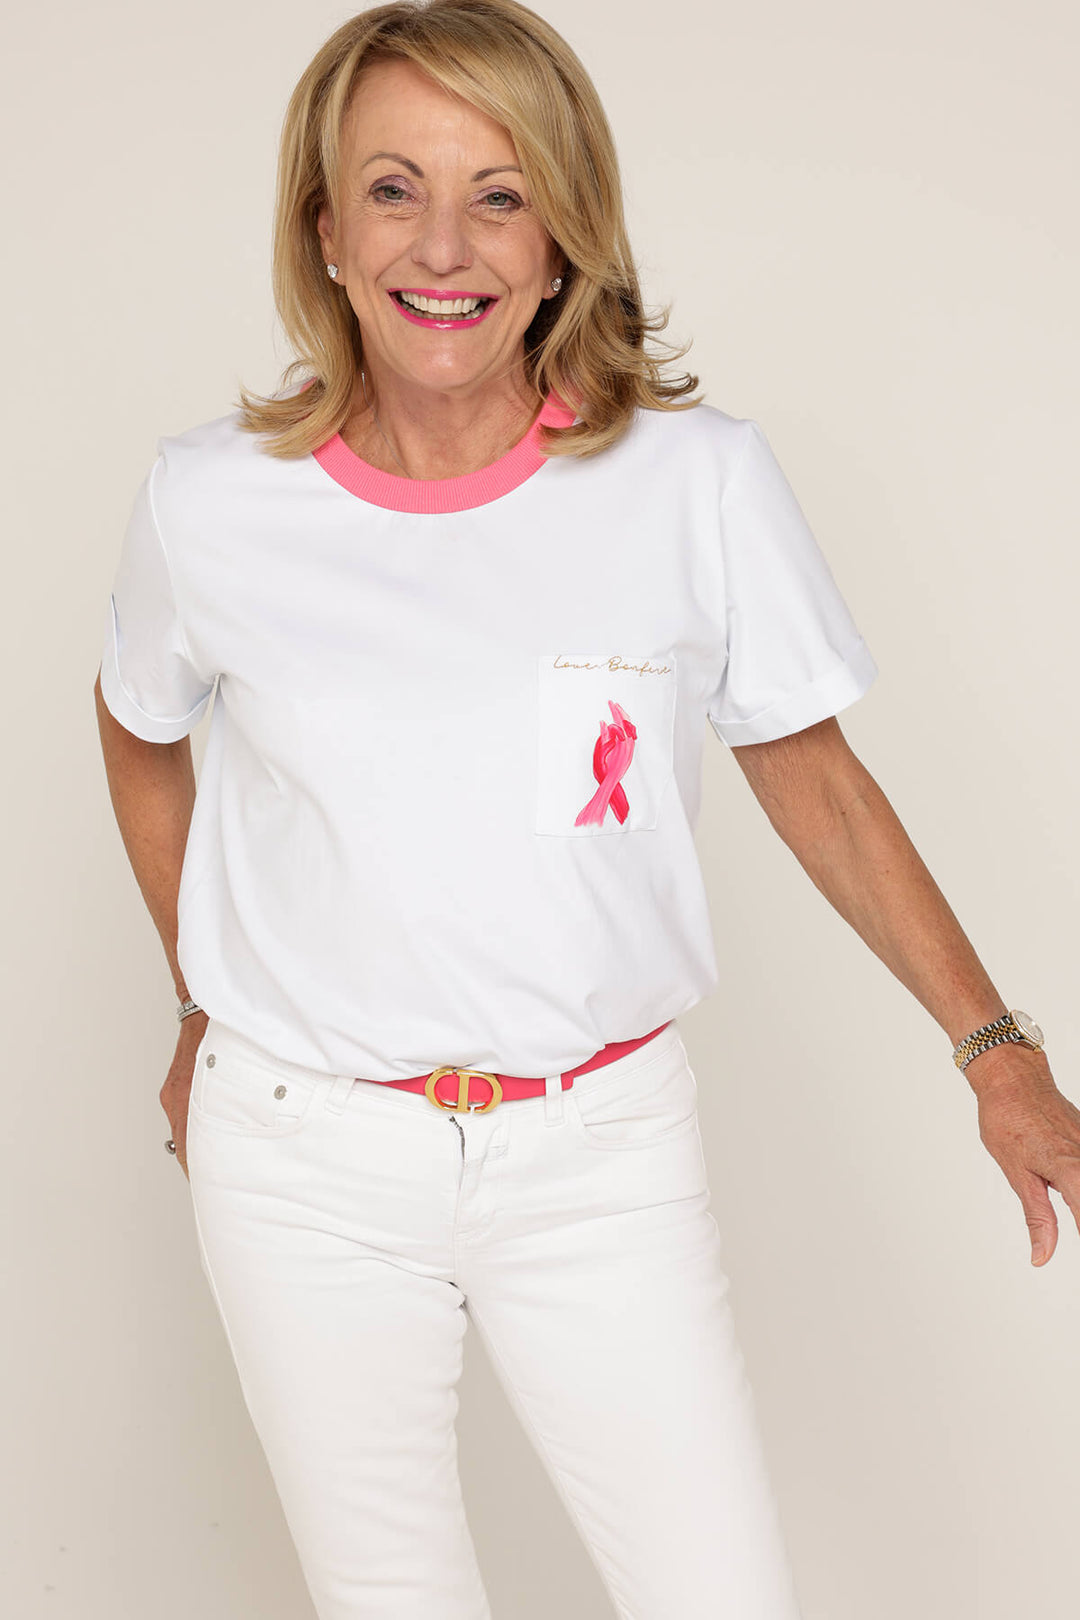 Jody's Breast Cancer Journey